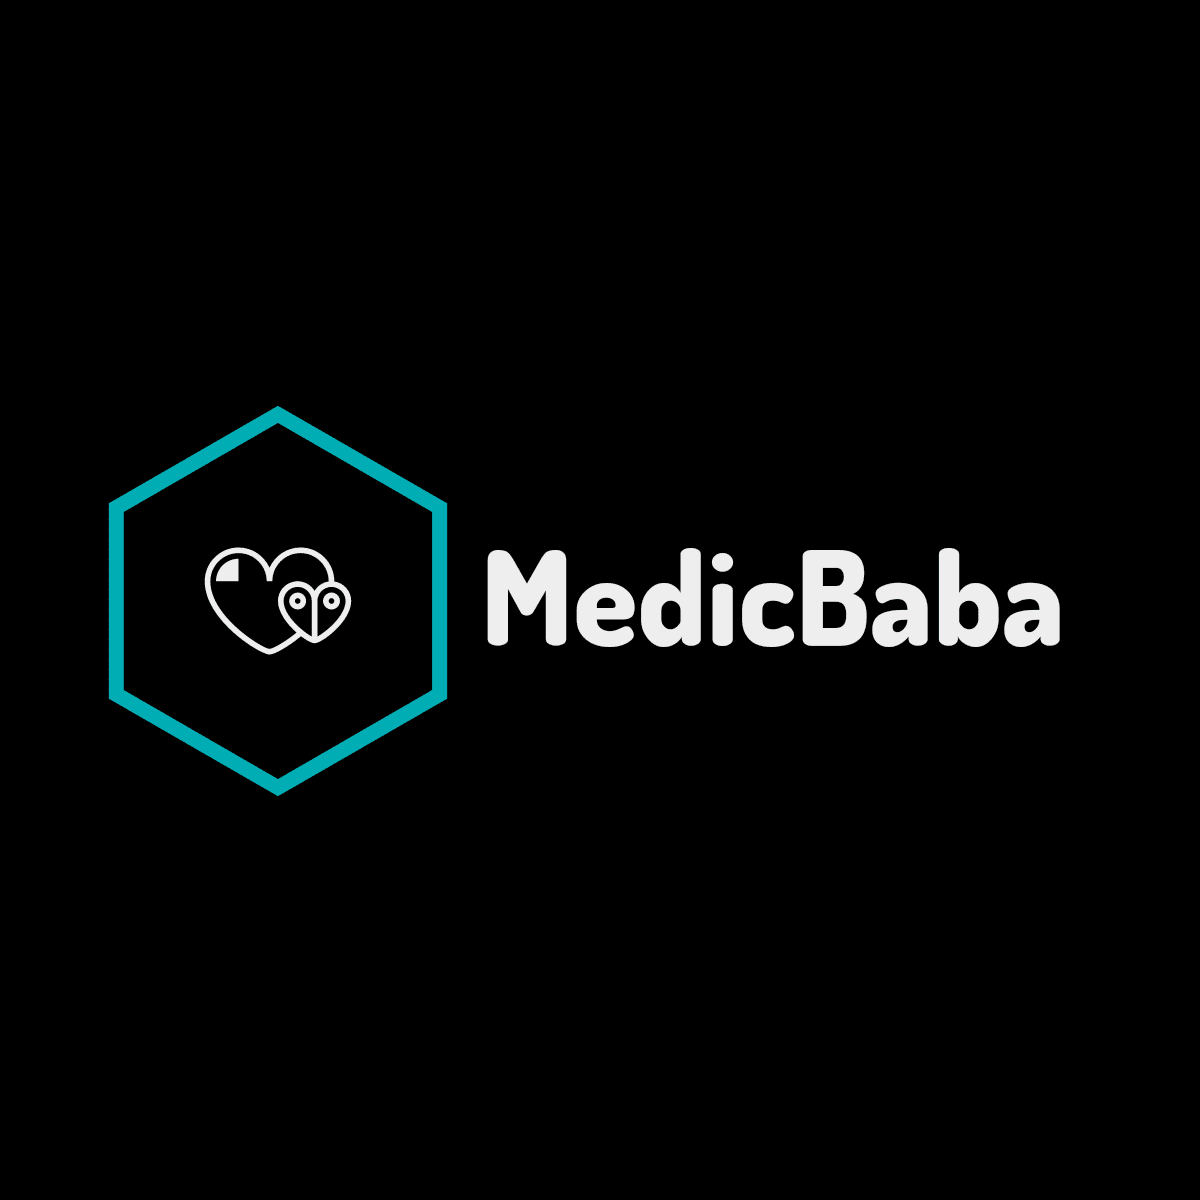 Medicbaba